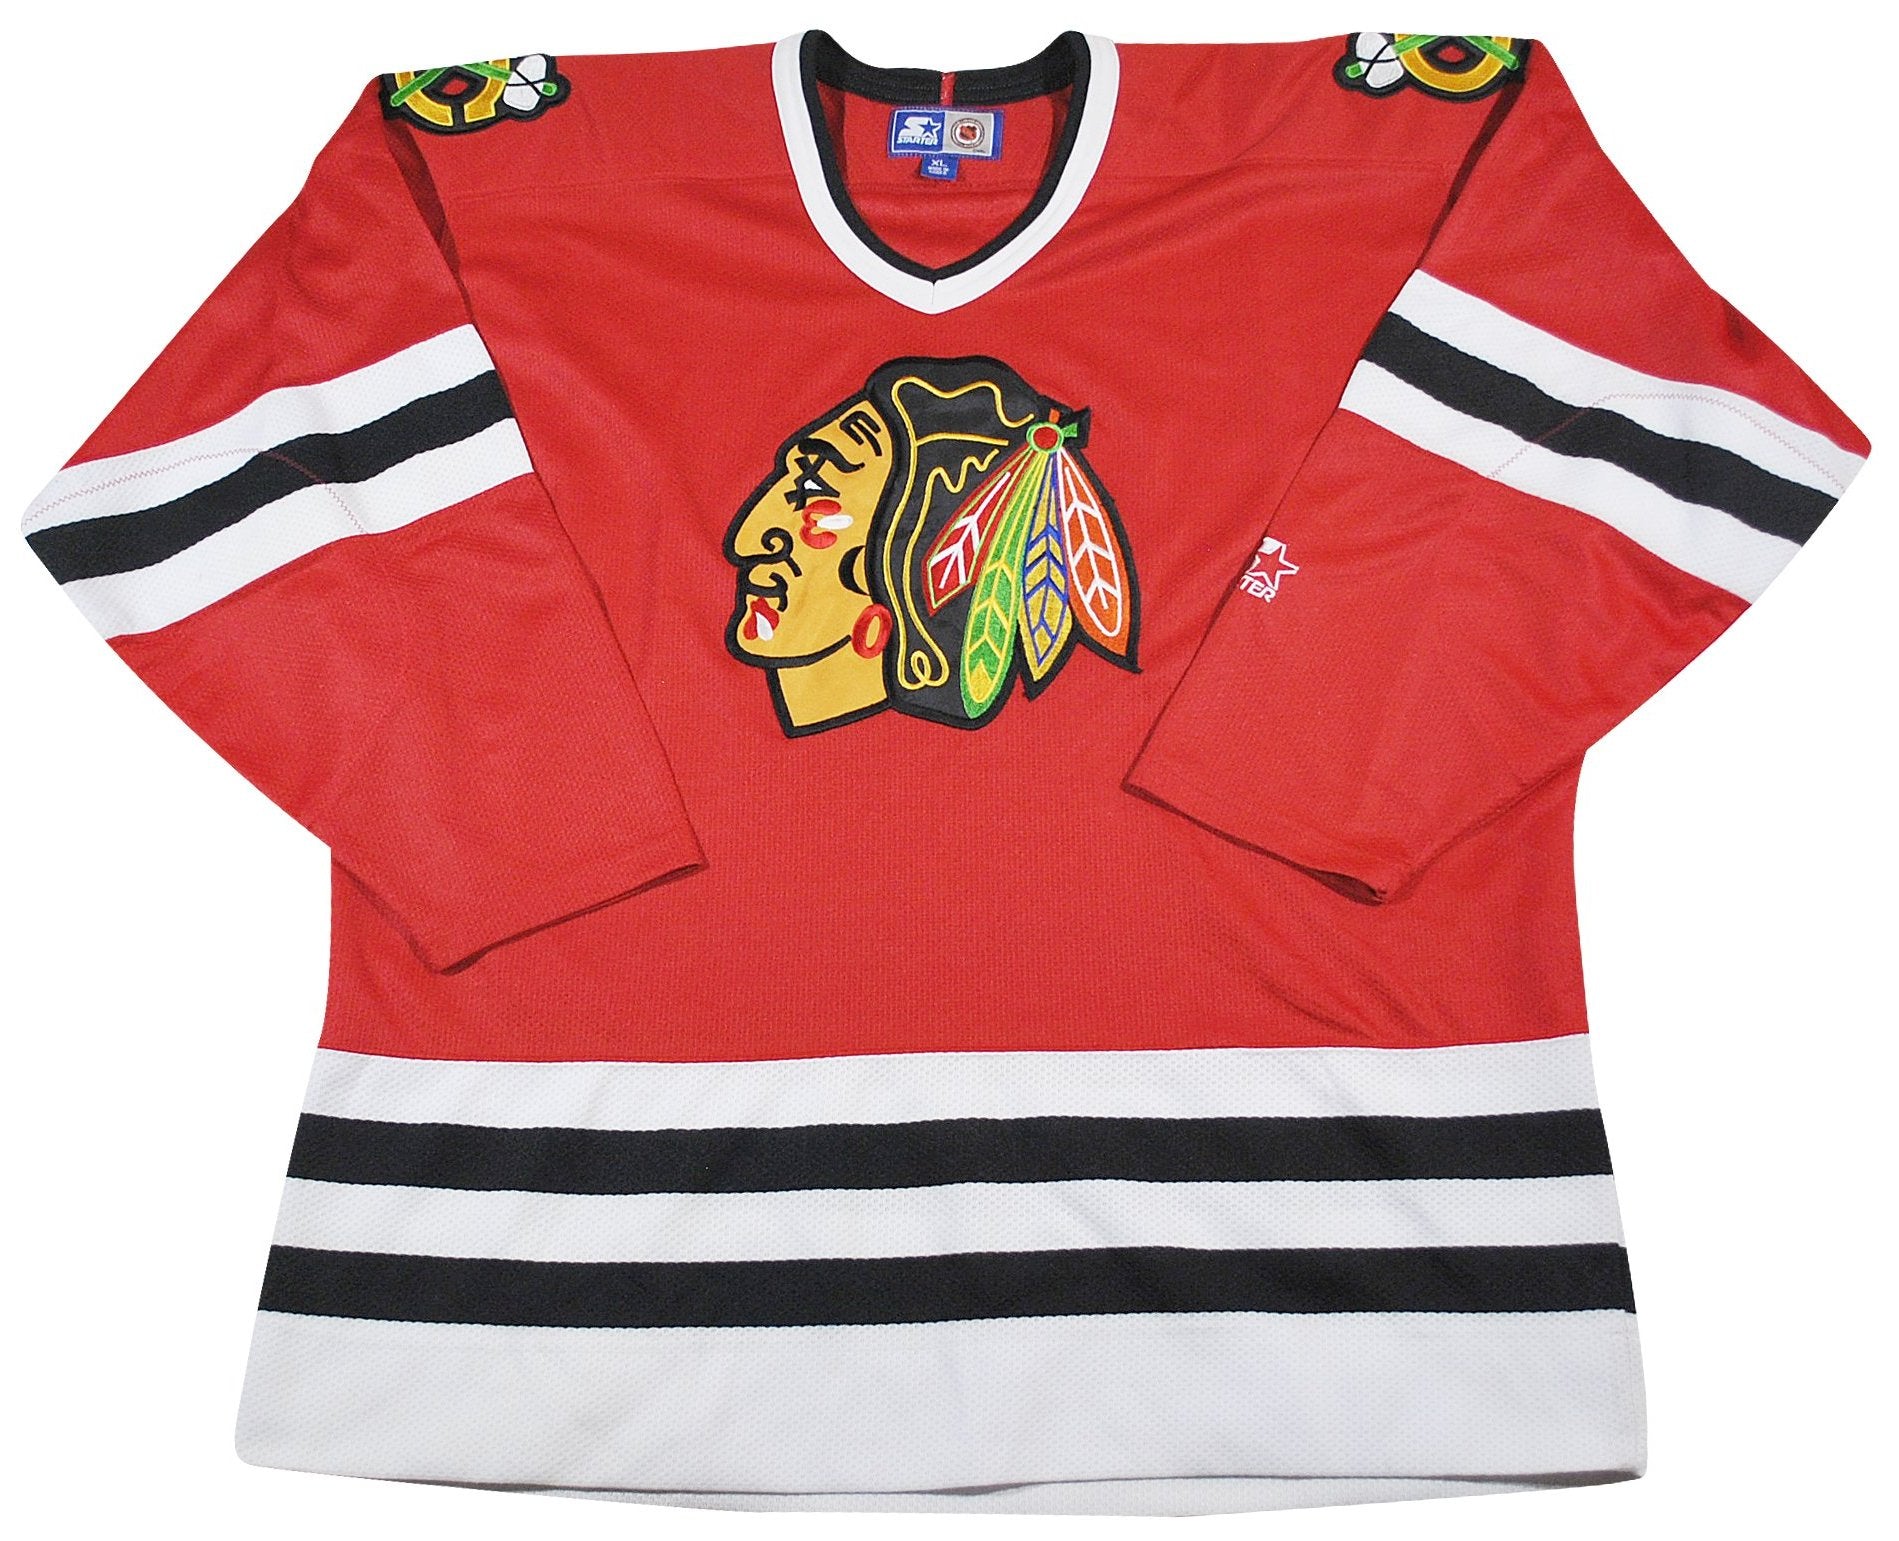 chicago blackhawks vintage jersey